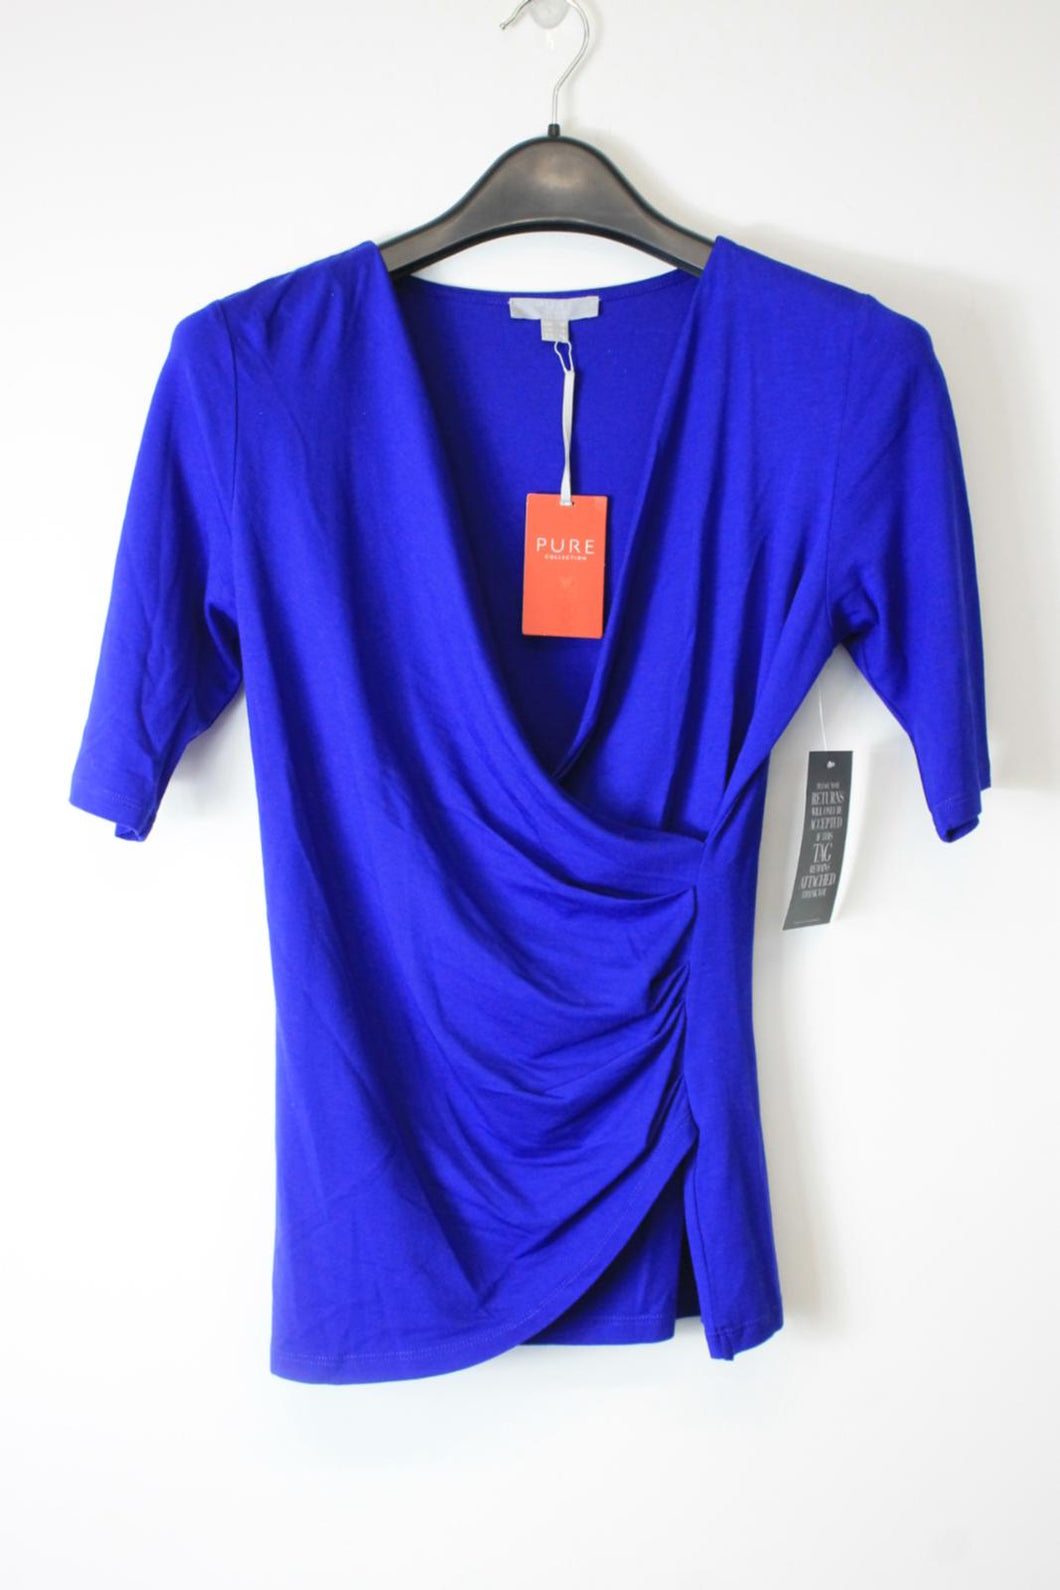 PURE Ladies Blue Short Sleeve Curved Hem Wrap Top EU36 UK10 BNWT